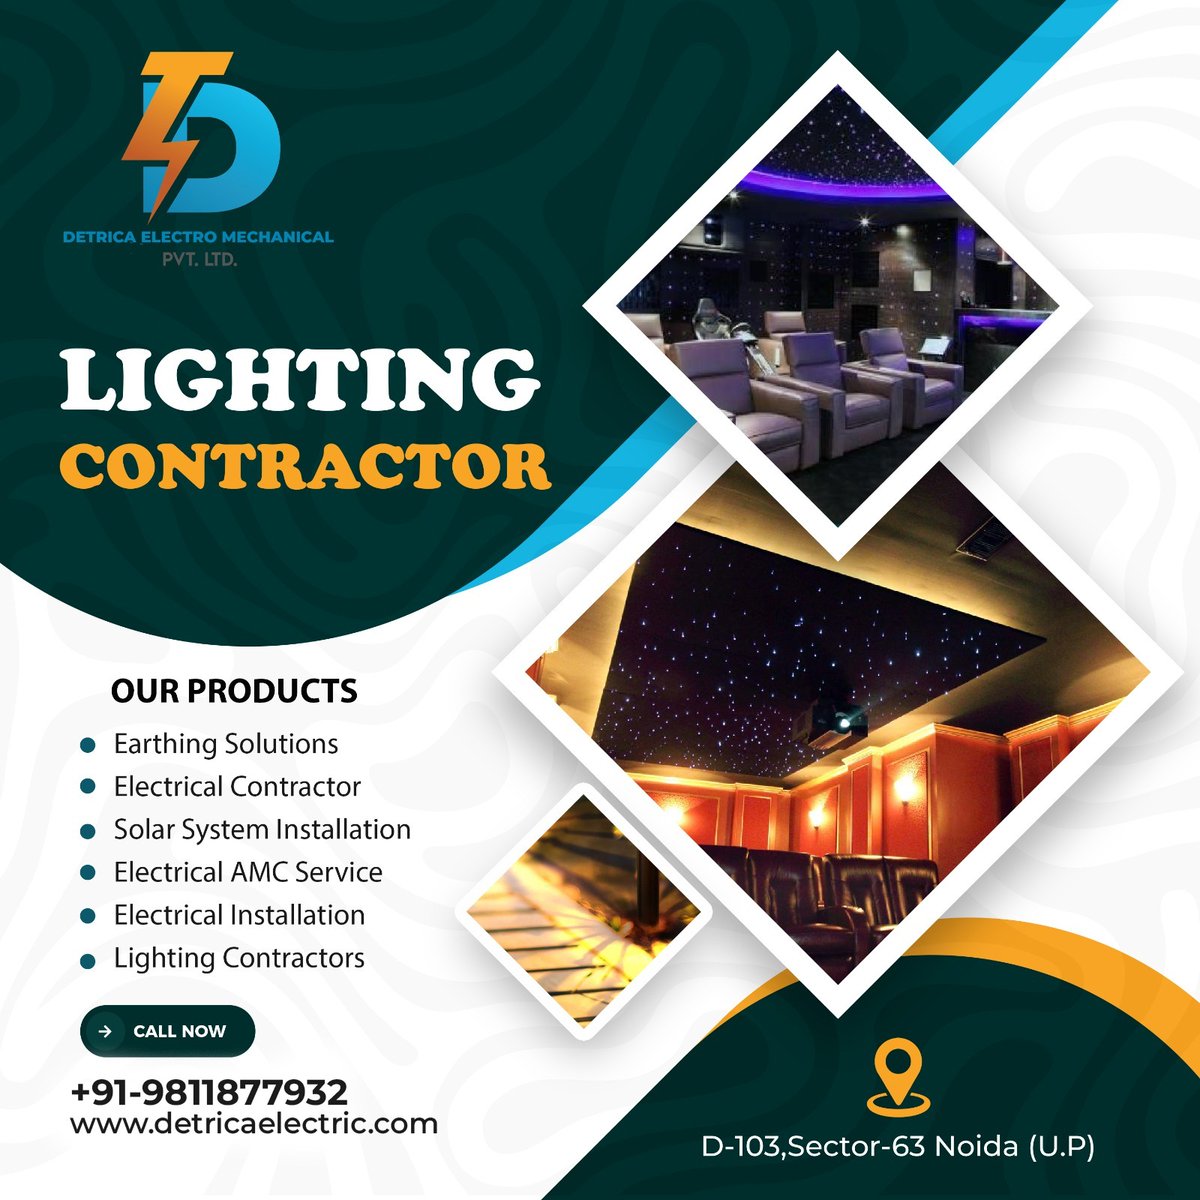 LIGHTING CONTRACTOR
For More Info :-
Contact Us:- +91-9811877932
Visit Us :- detricaelectric.com
Email:- detricaelectric@gmail.com
#lightinstallation #lightart #art #lightingdesign #light #lighting #artinstallation #interiordesign #contemporaryart #design